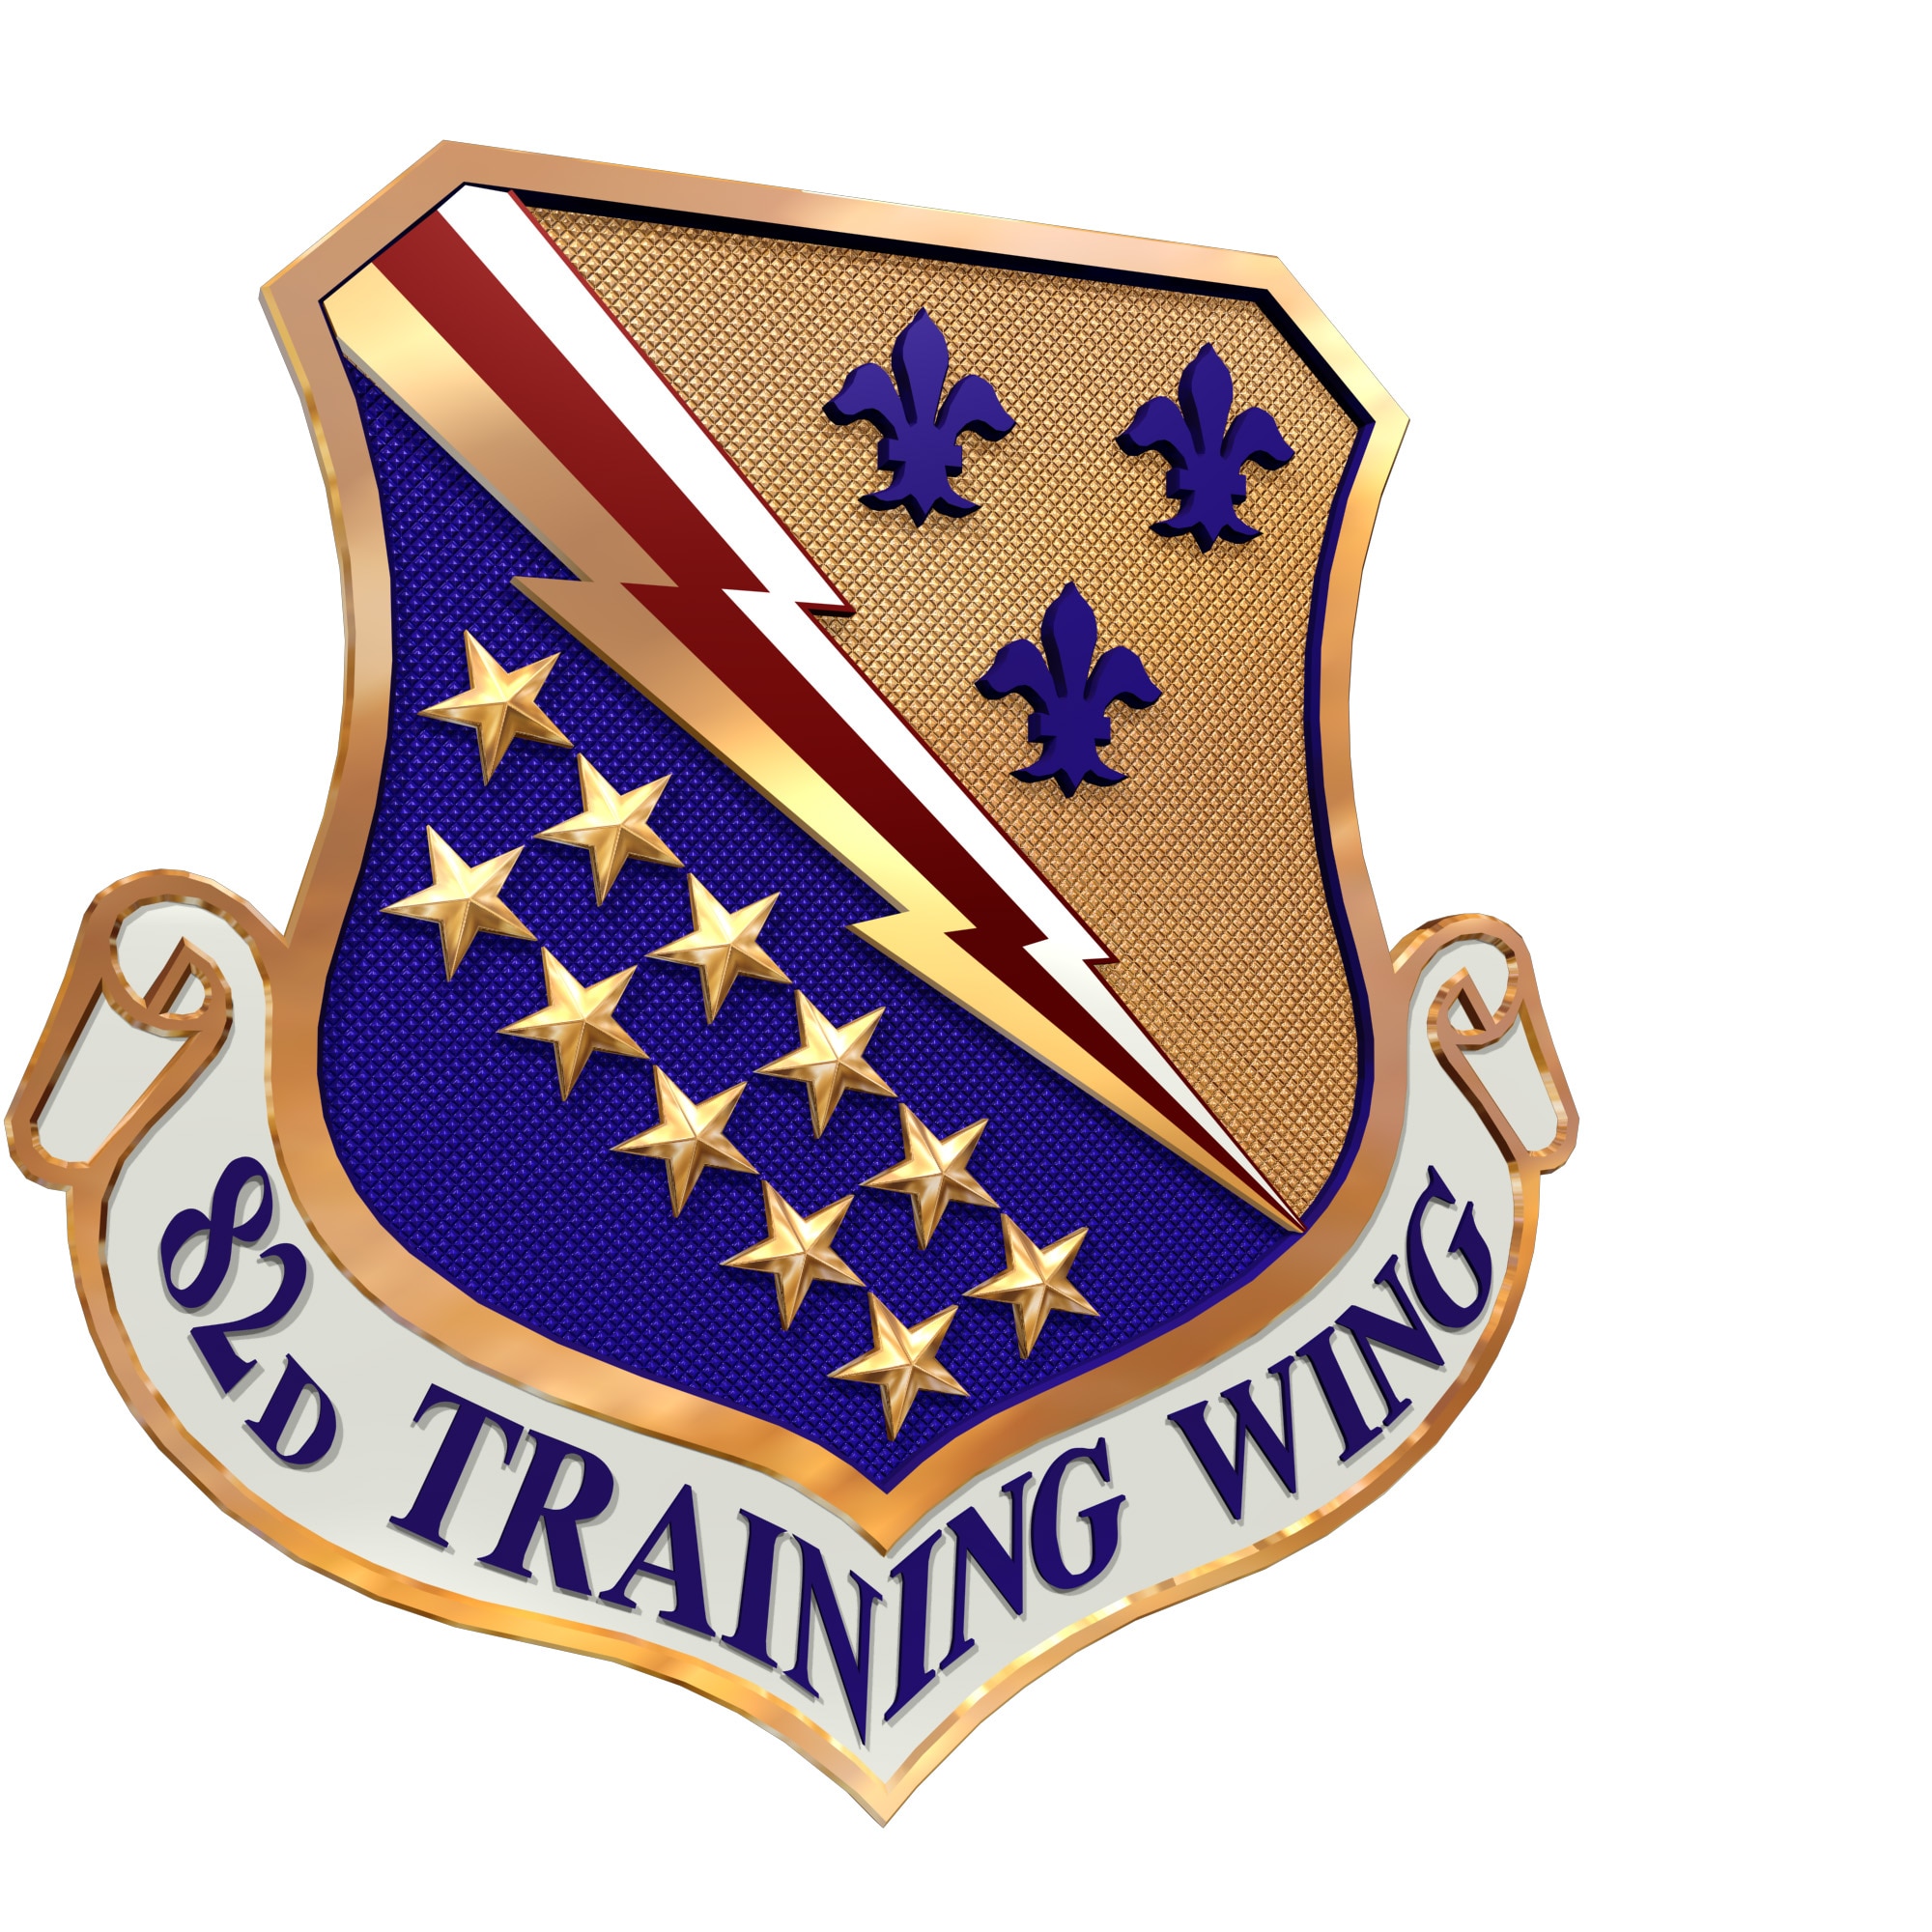 82nd Training Wing shield